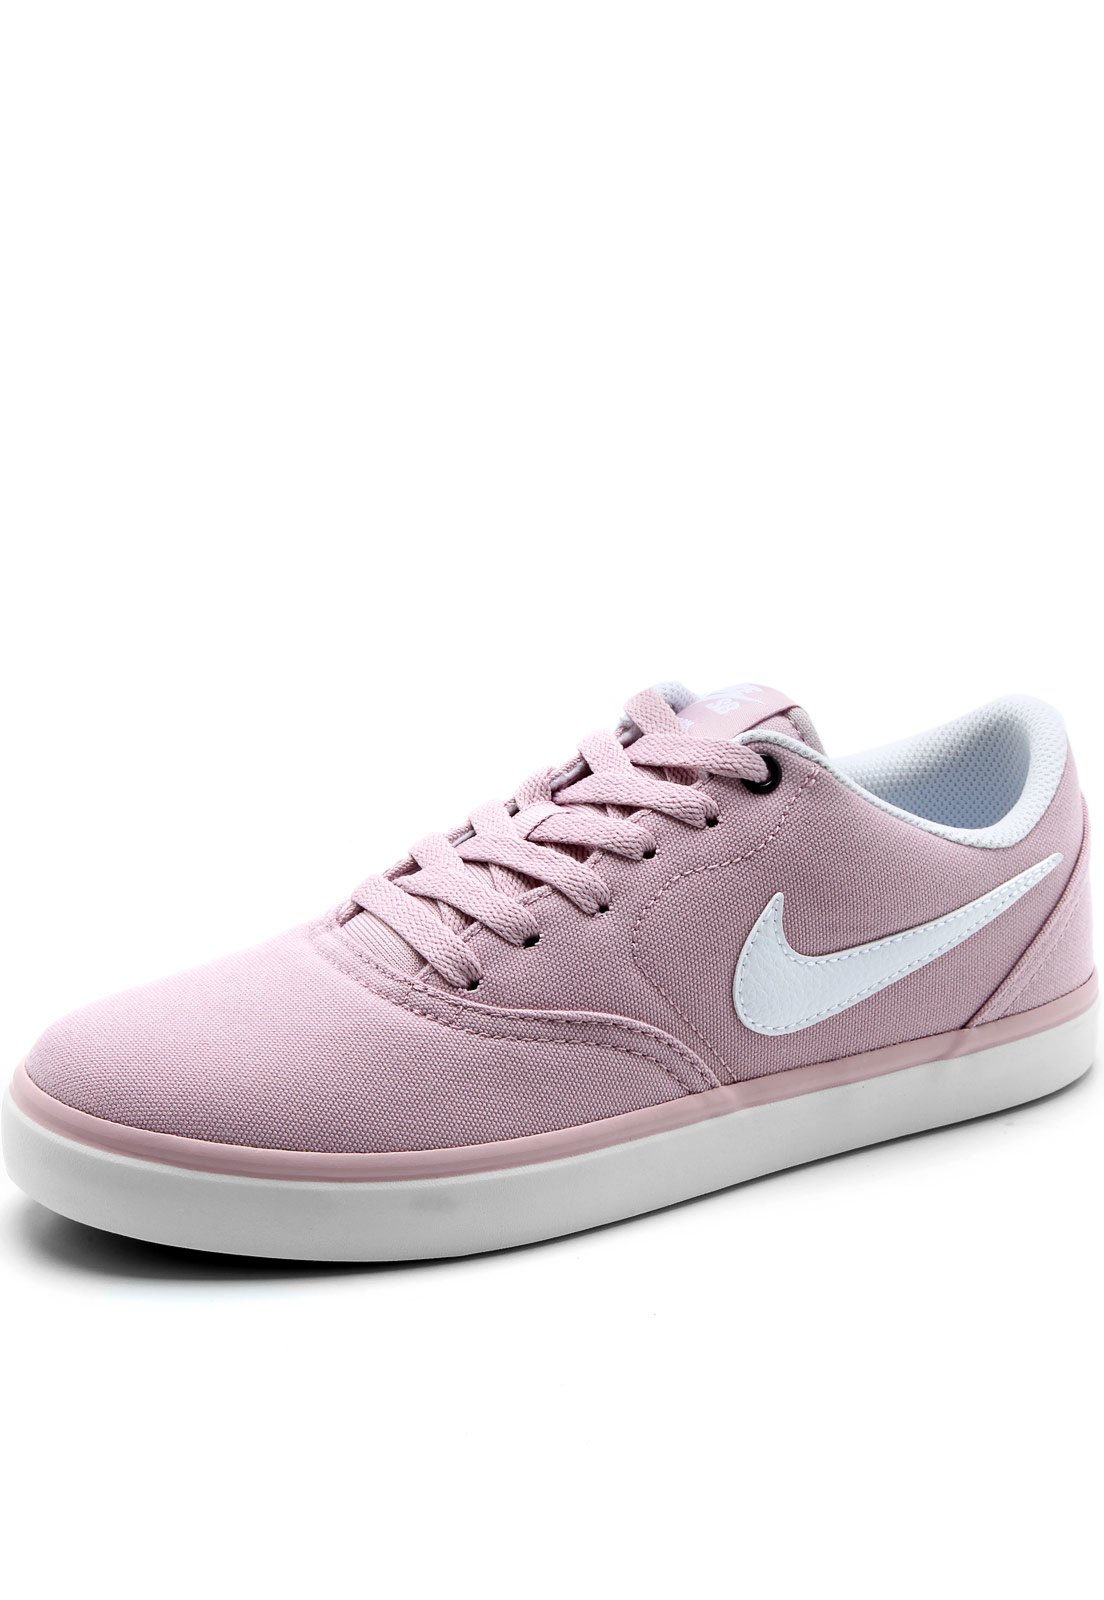 tenis nike rosa com branco